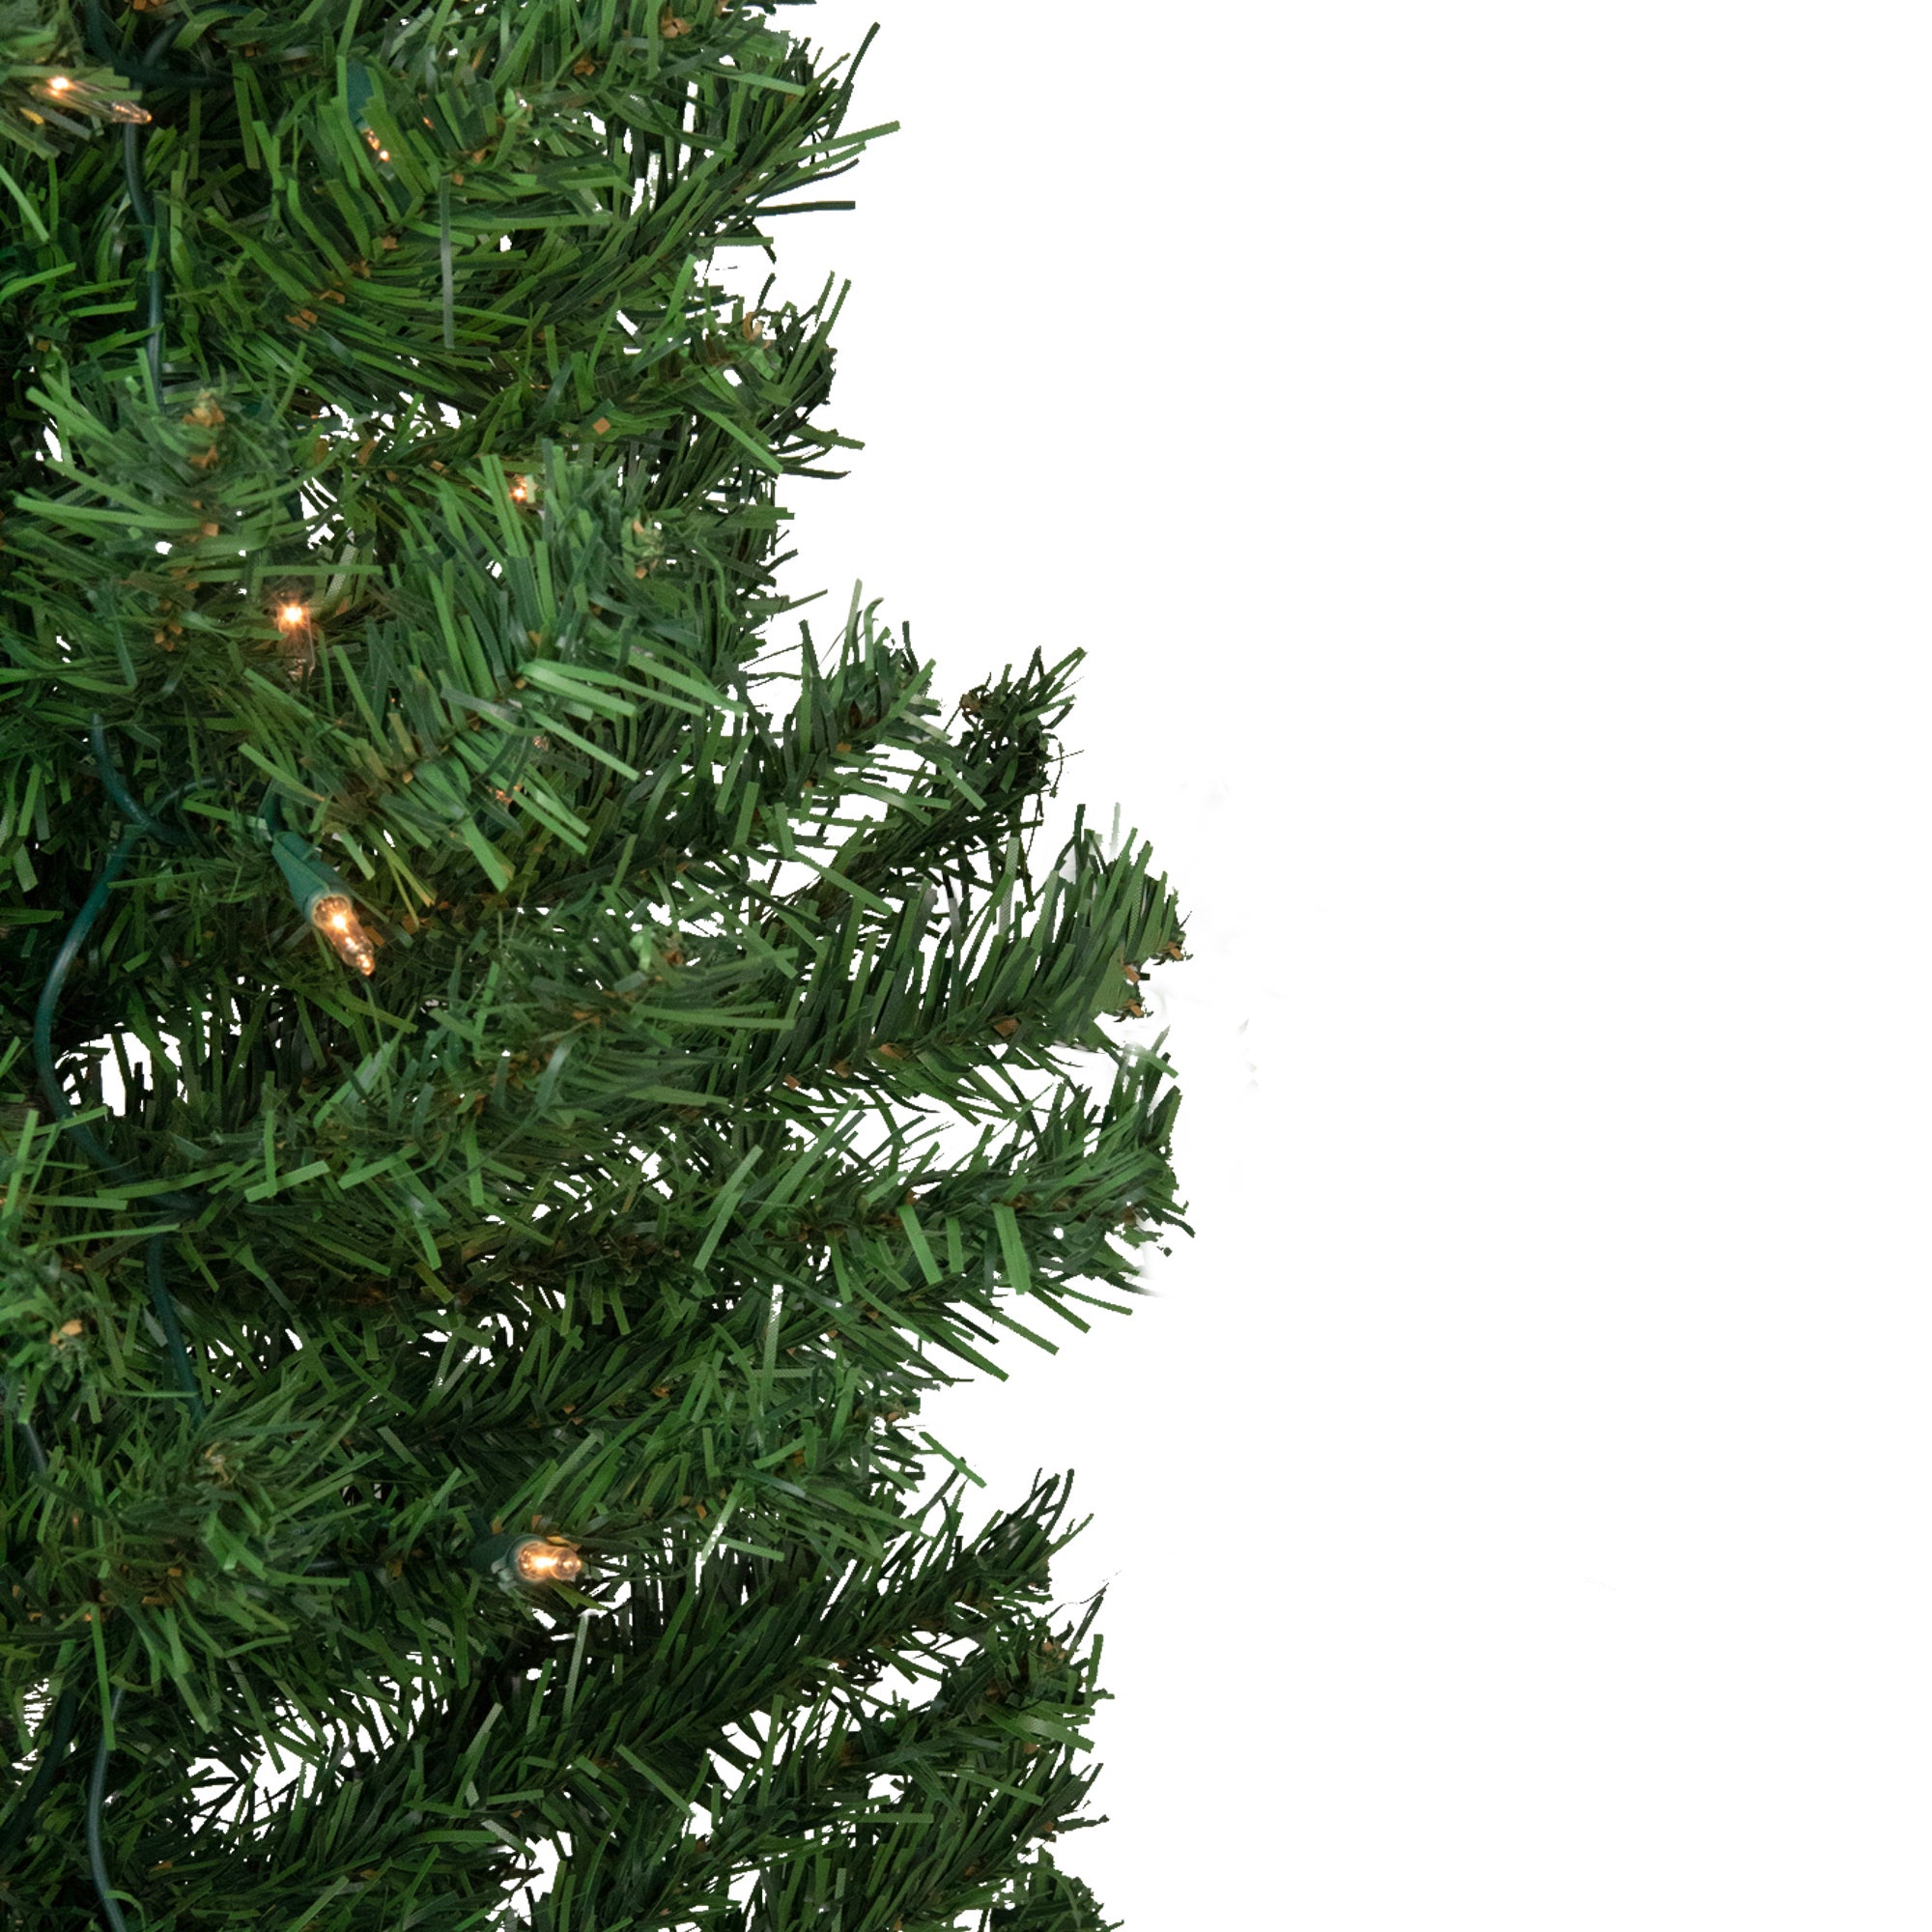 3' Pre lit Green Medium Niagara Pine Artificial Christmas Tree